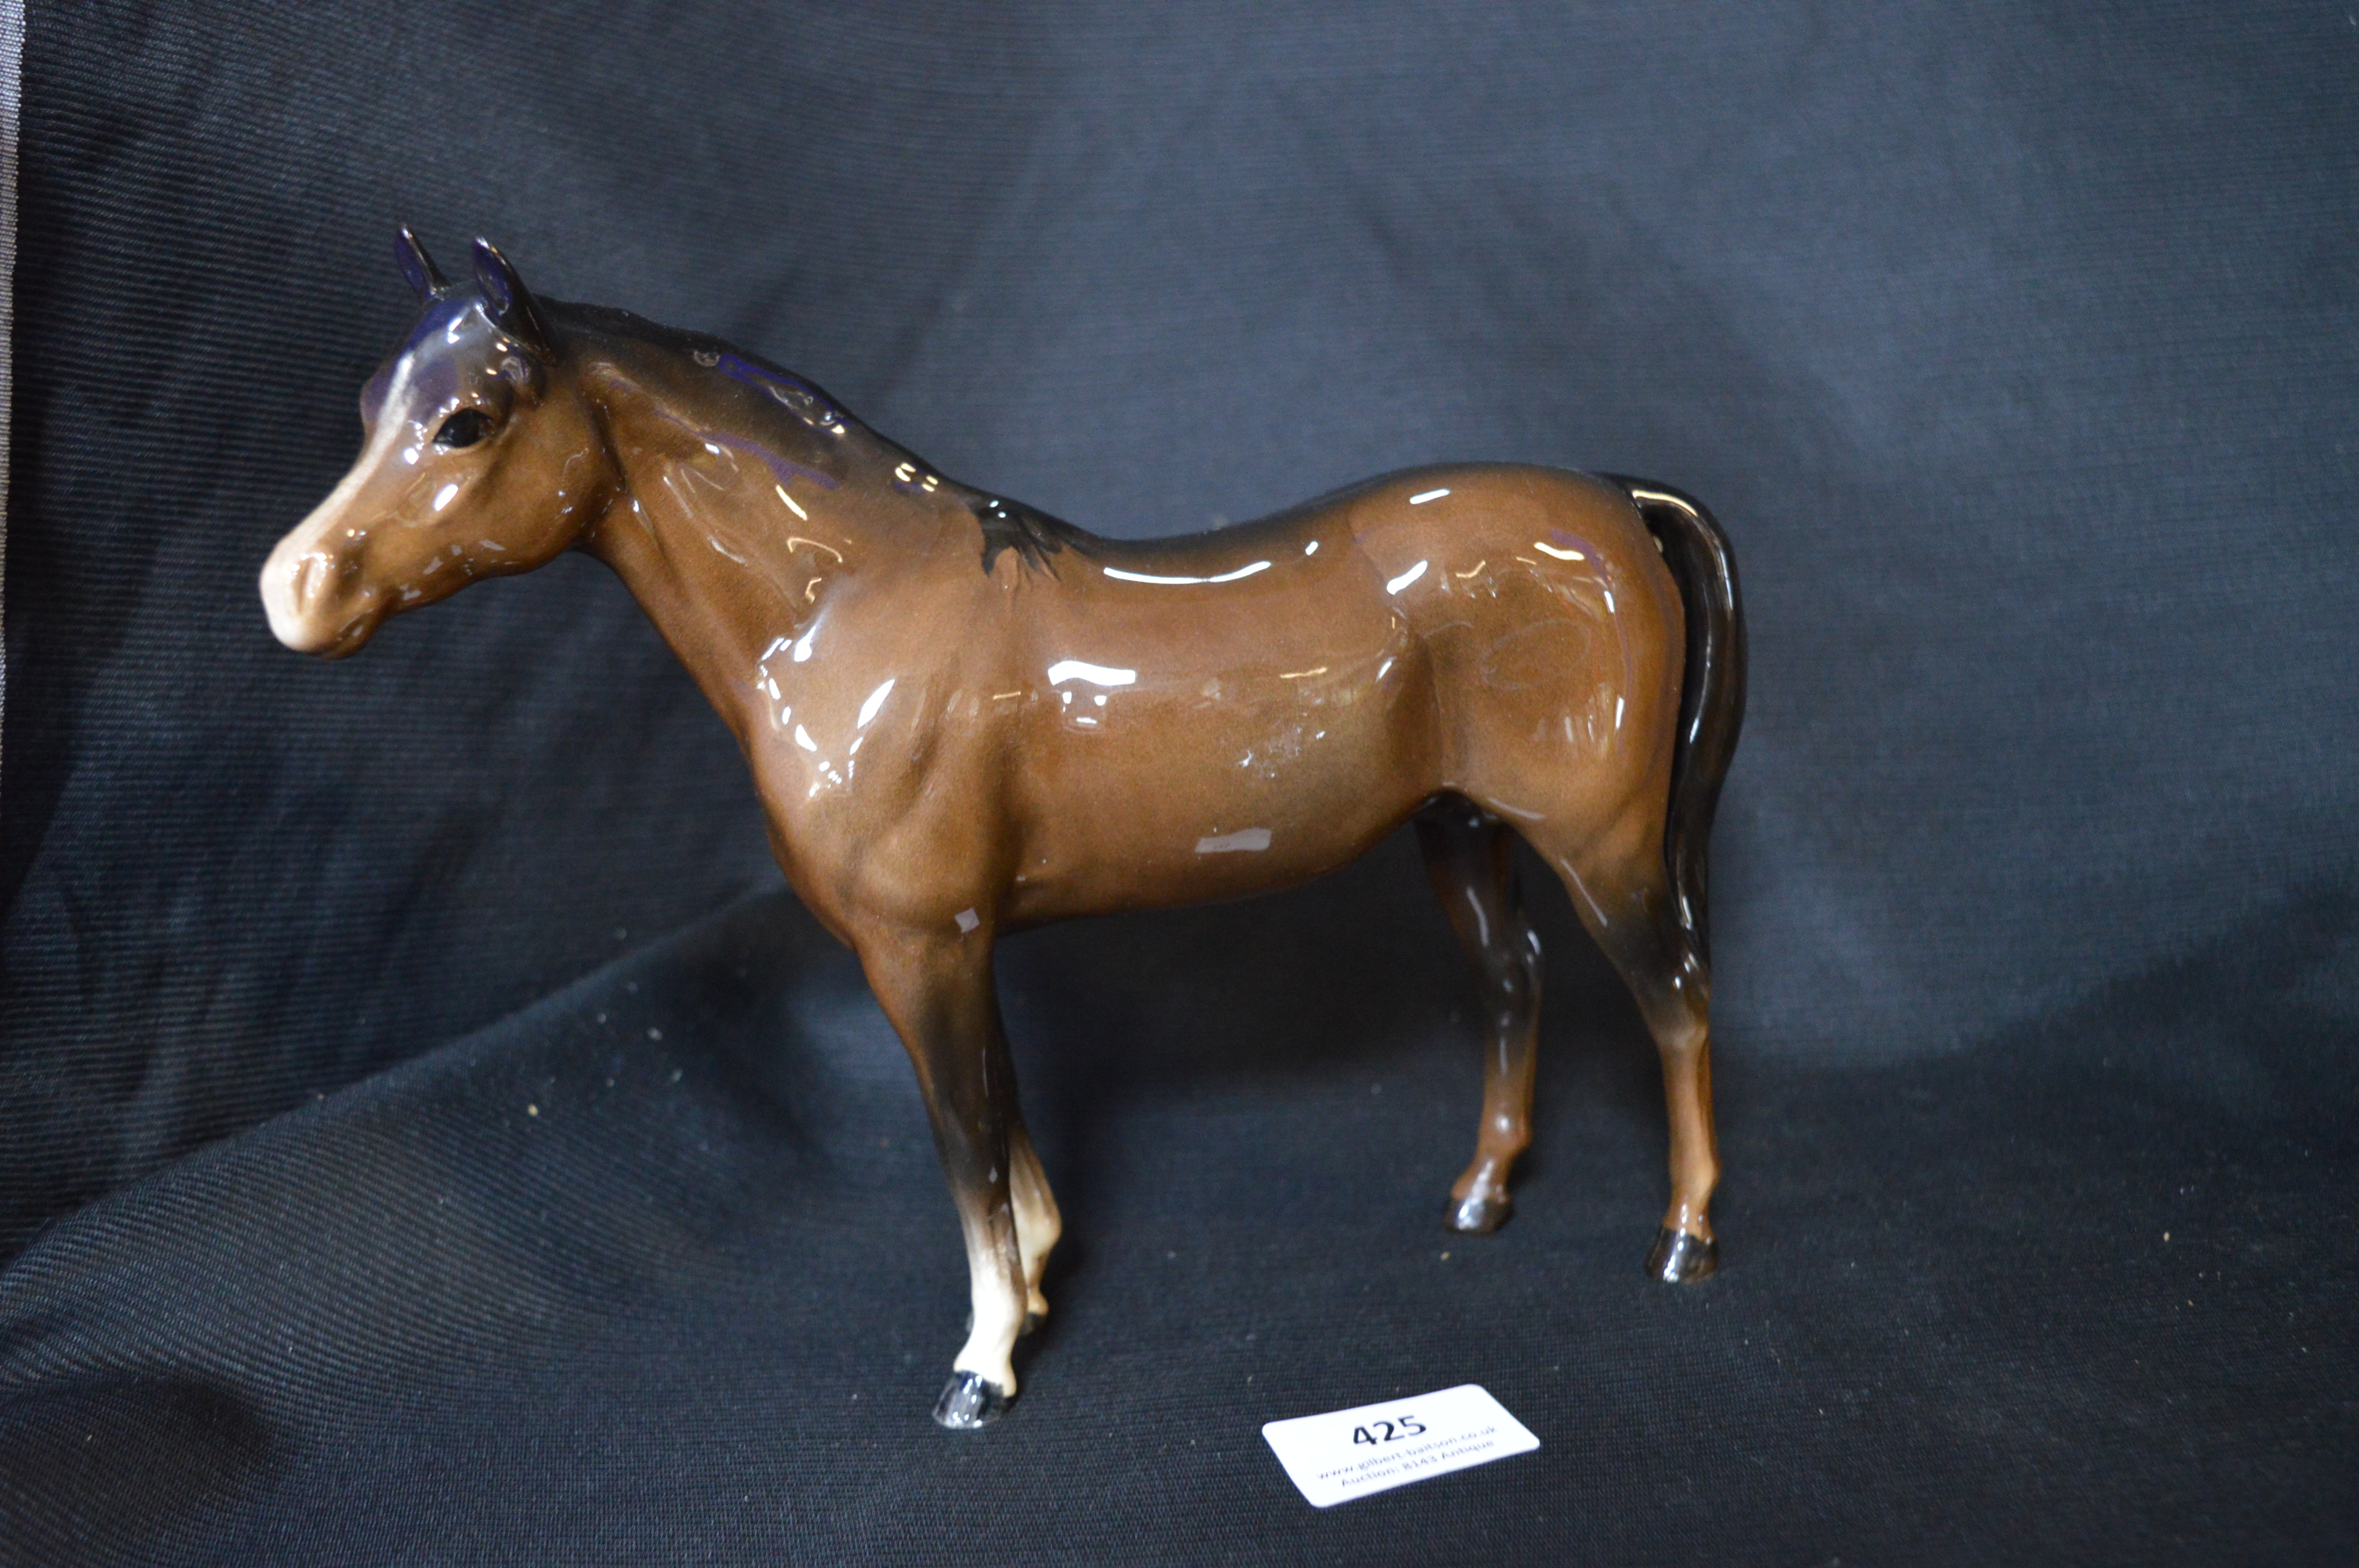 Beswick Figure of a Race Horse